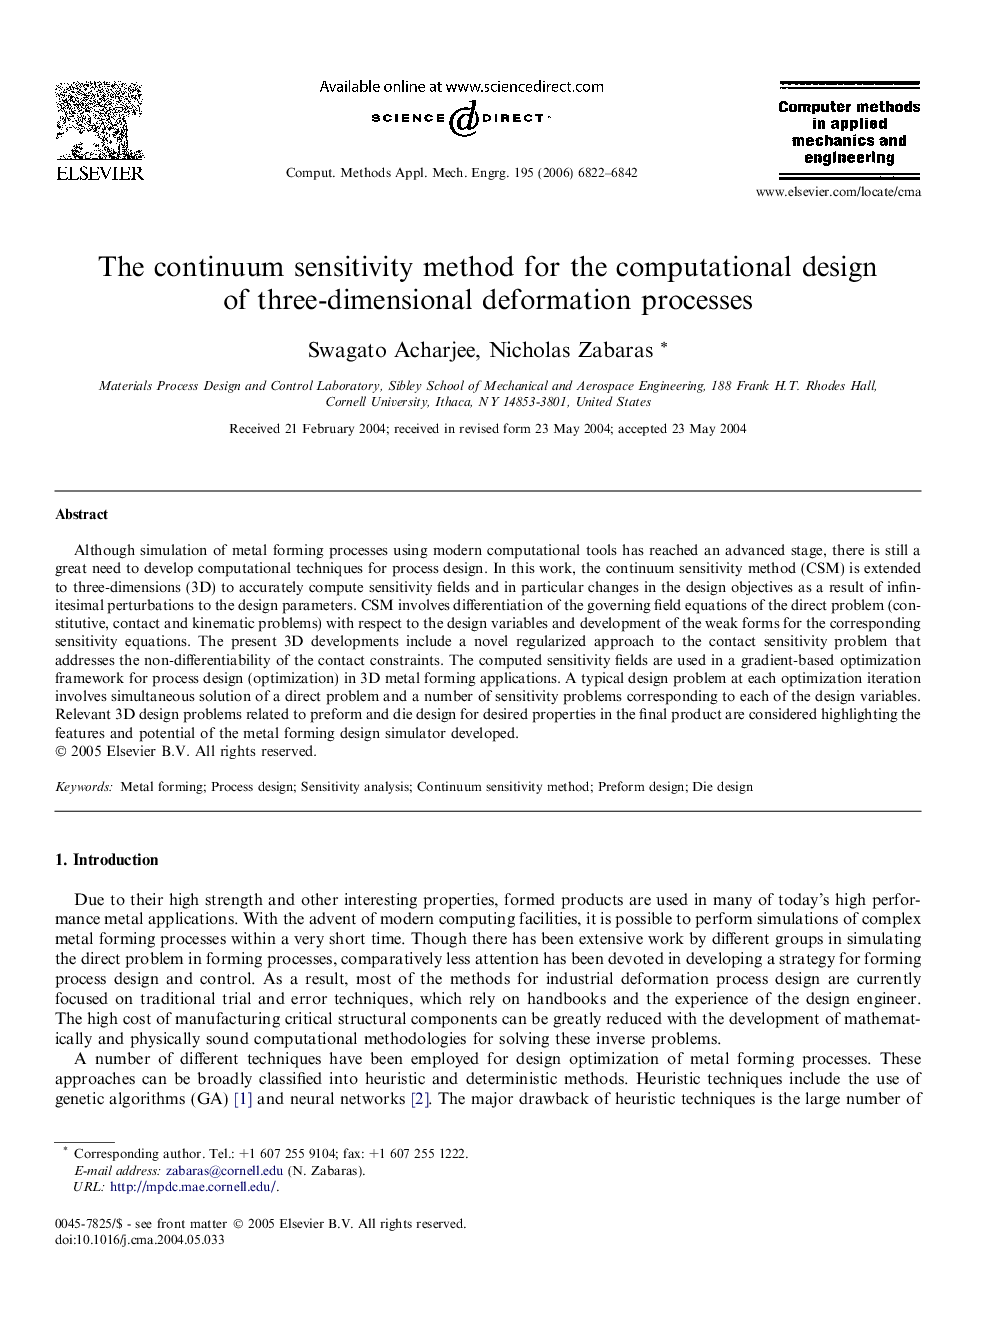 The continuum sensitivity method for the computational design of three-dimensional deformation processes